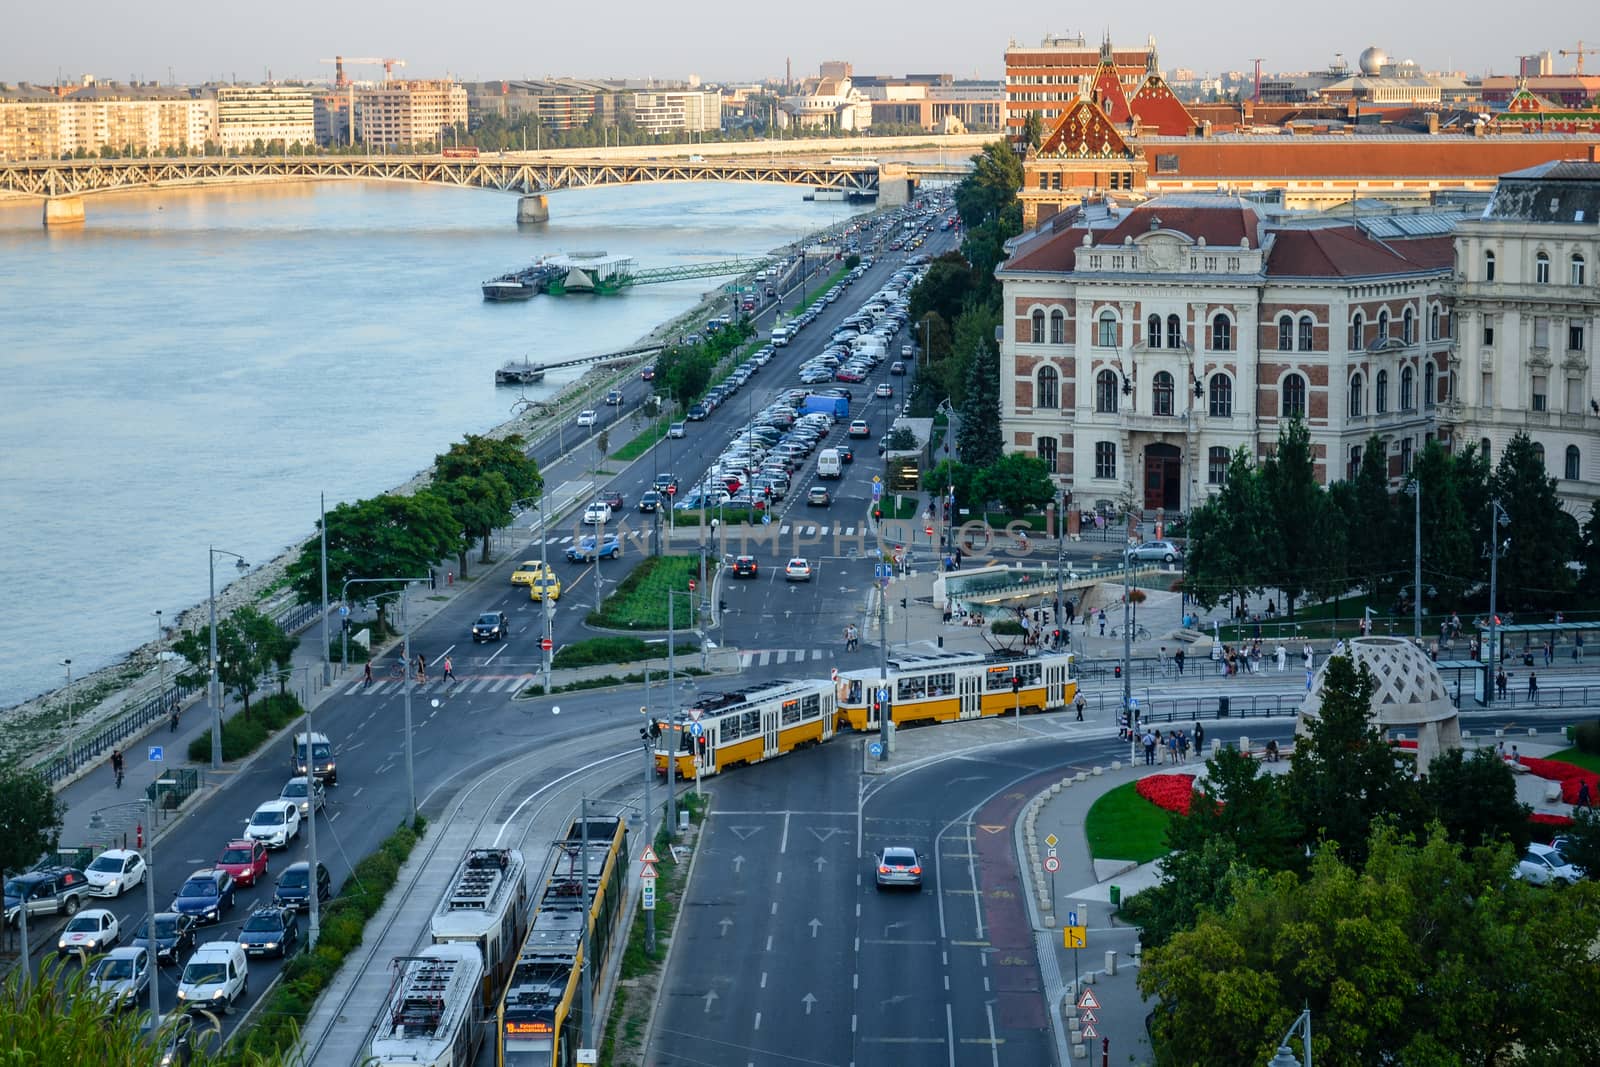 Embankment of the Danube in Budapest, Hungary by chernobrovin